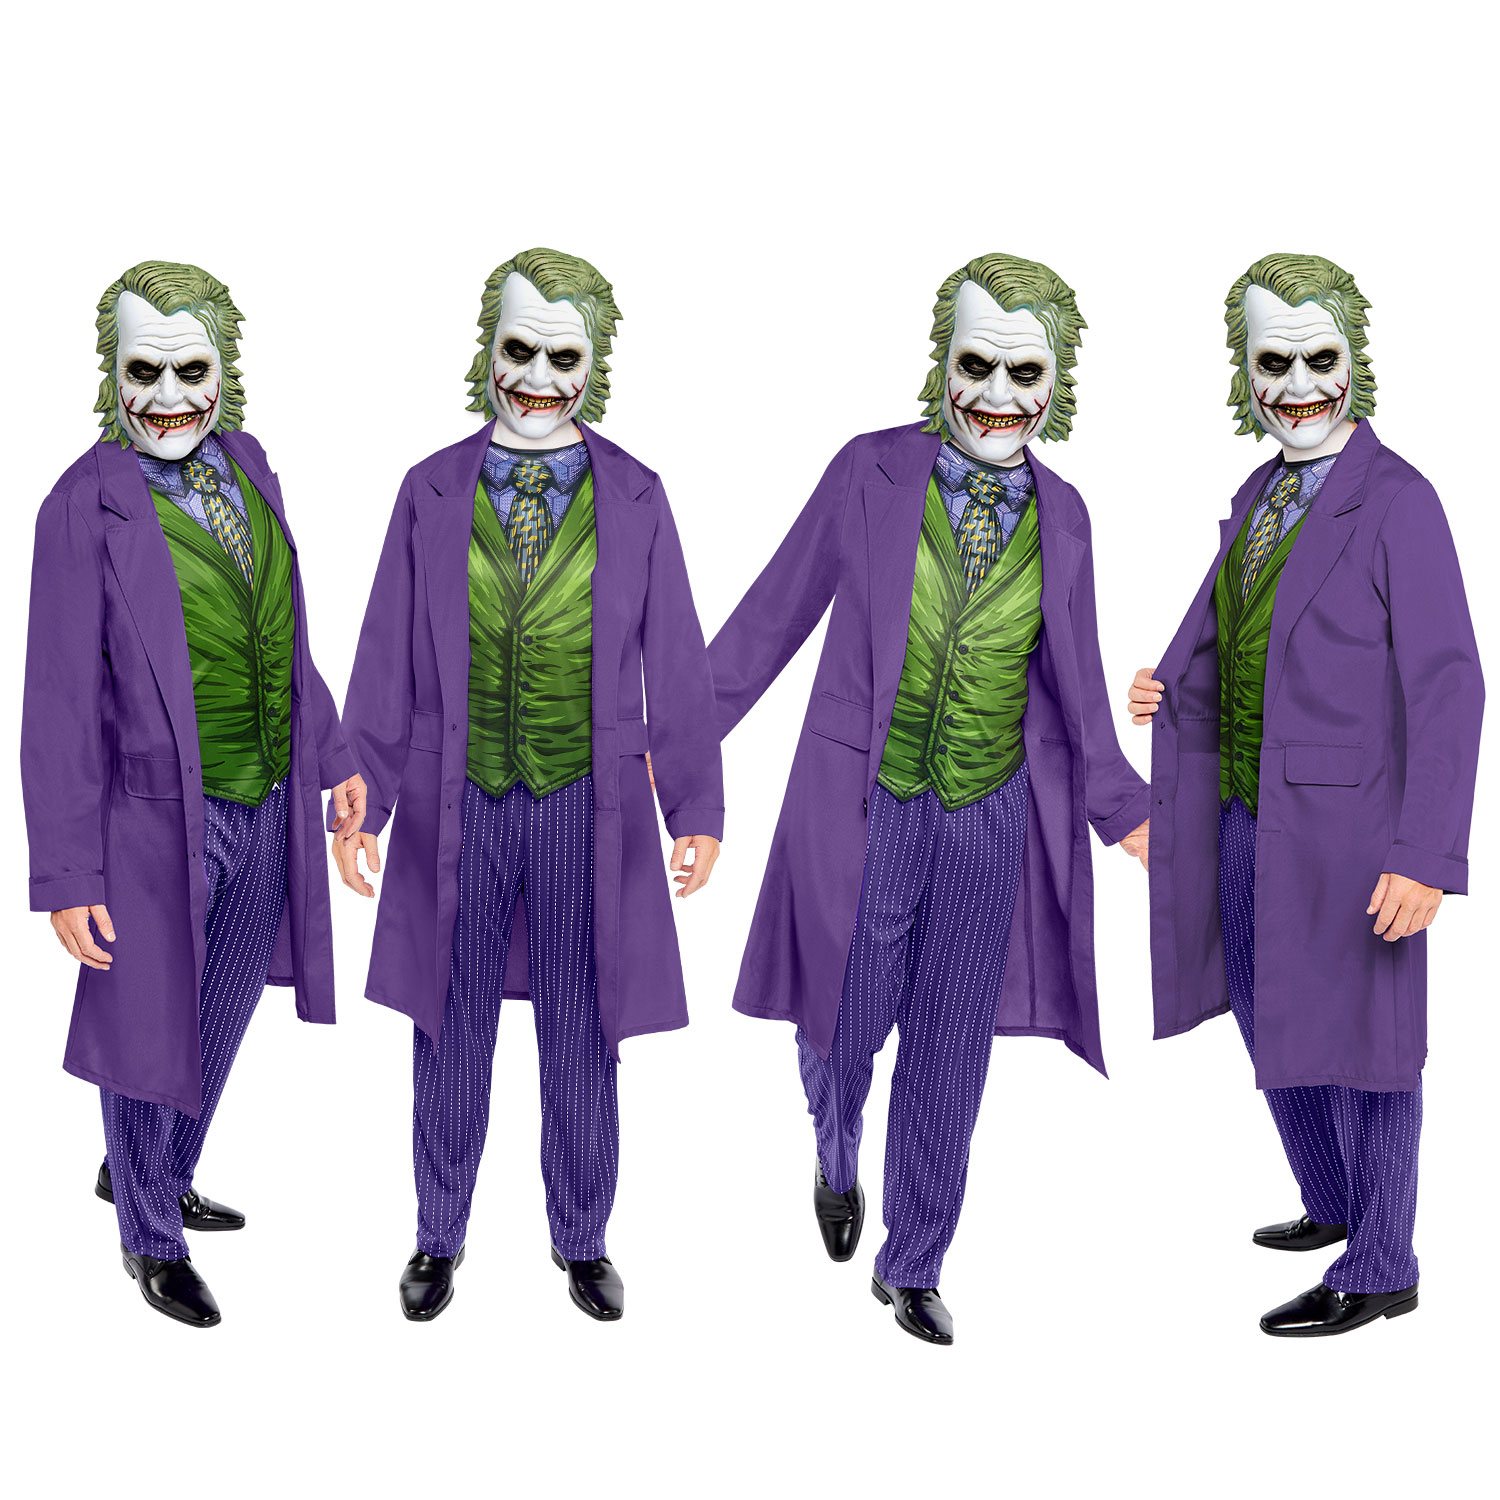 Joker Movie Costume - Size Large - 1 PC : Amscan International